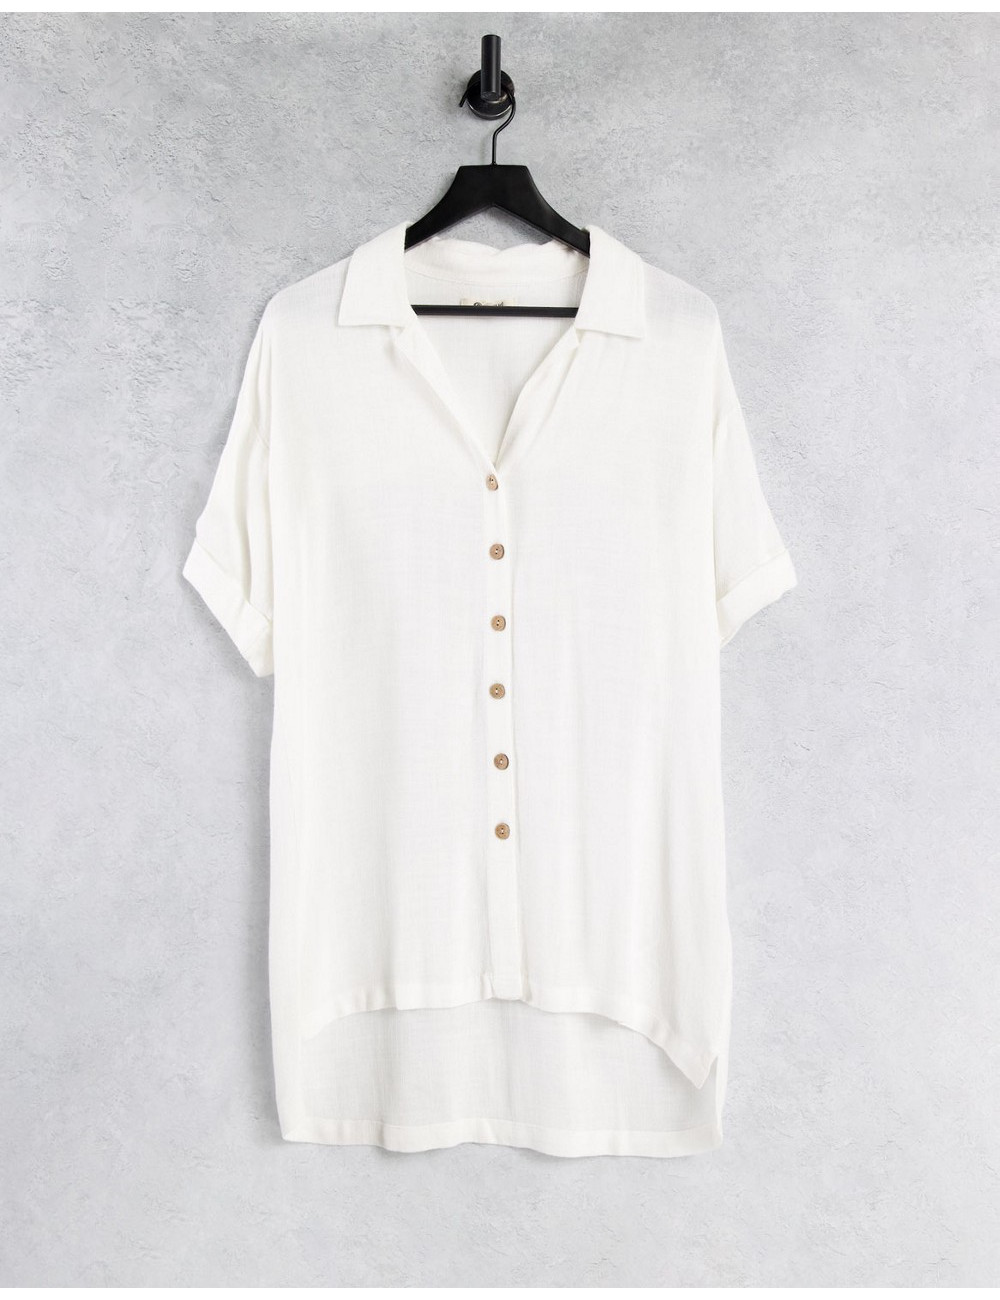 Rip Curl Ashore shirt in white